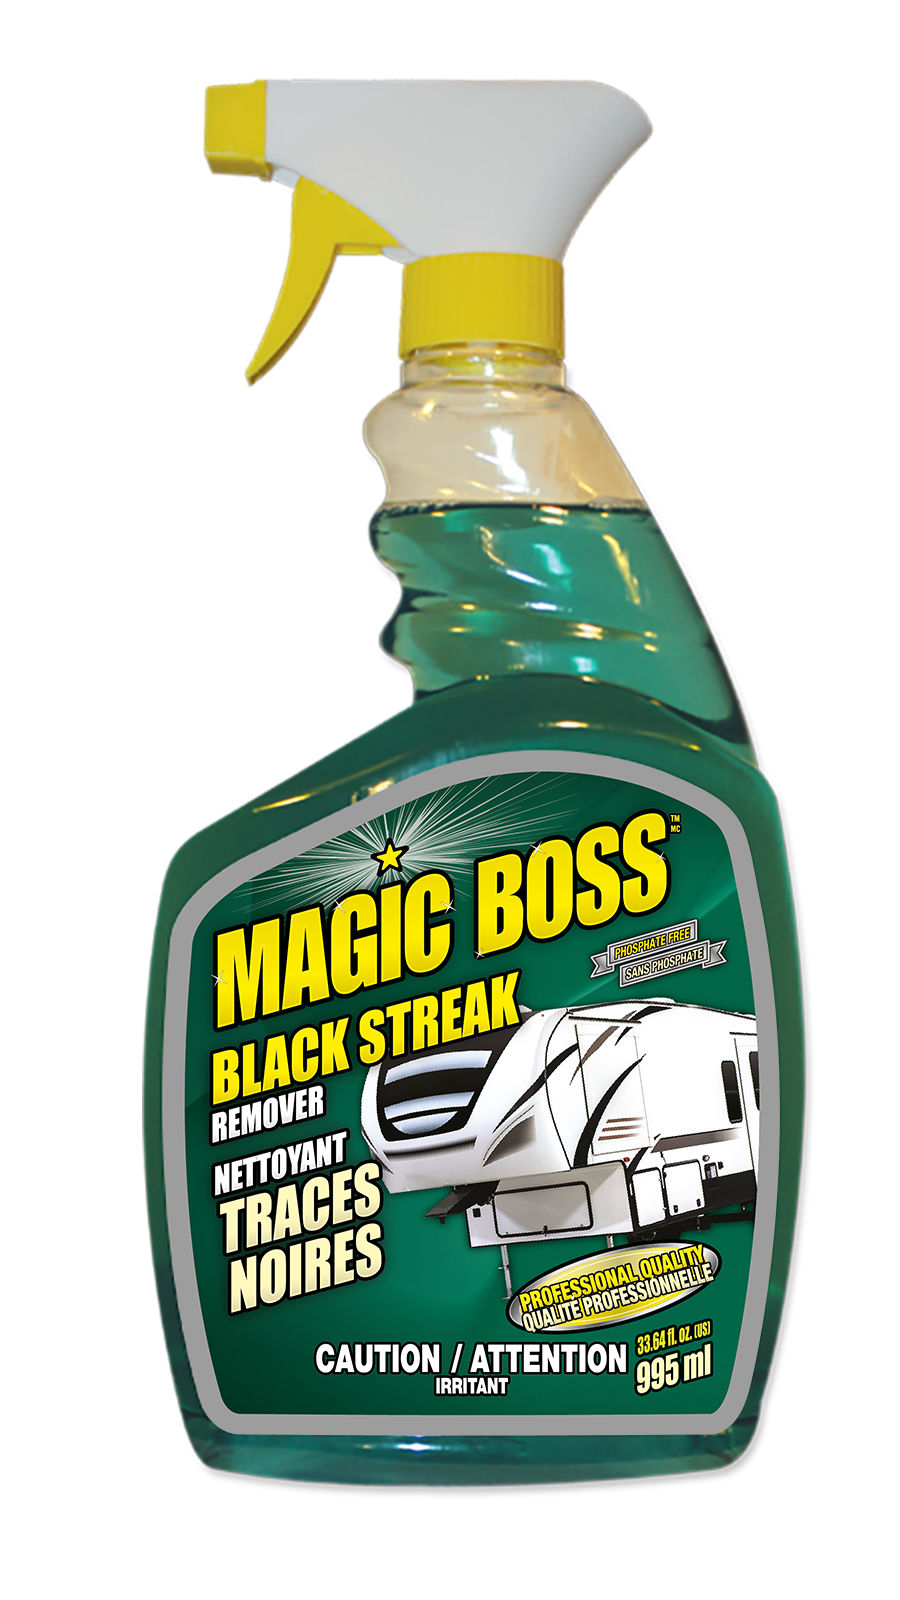 Magic Boss 1790 - Box of 12, Black Streak Remover (995 ml)